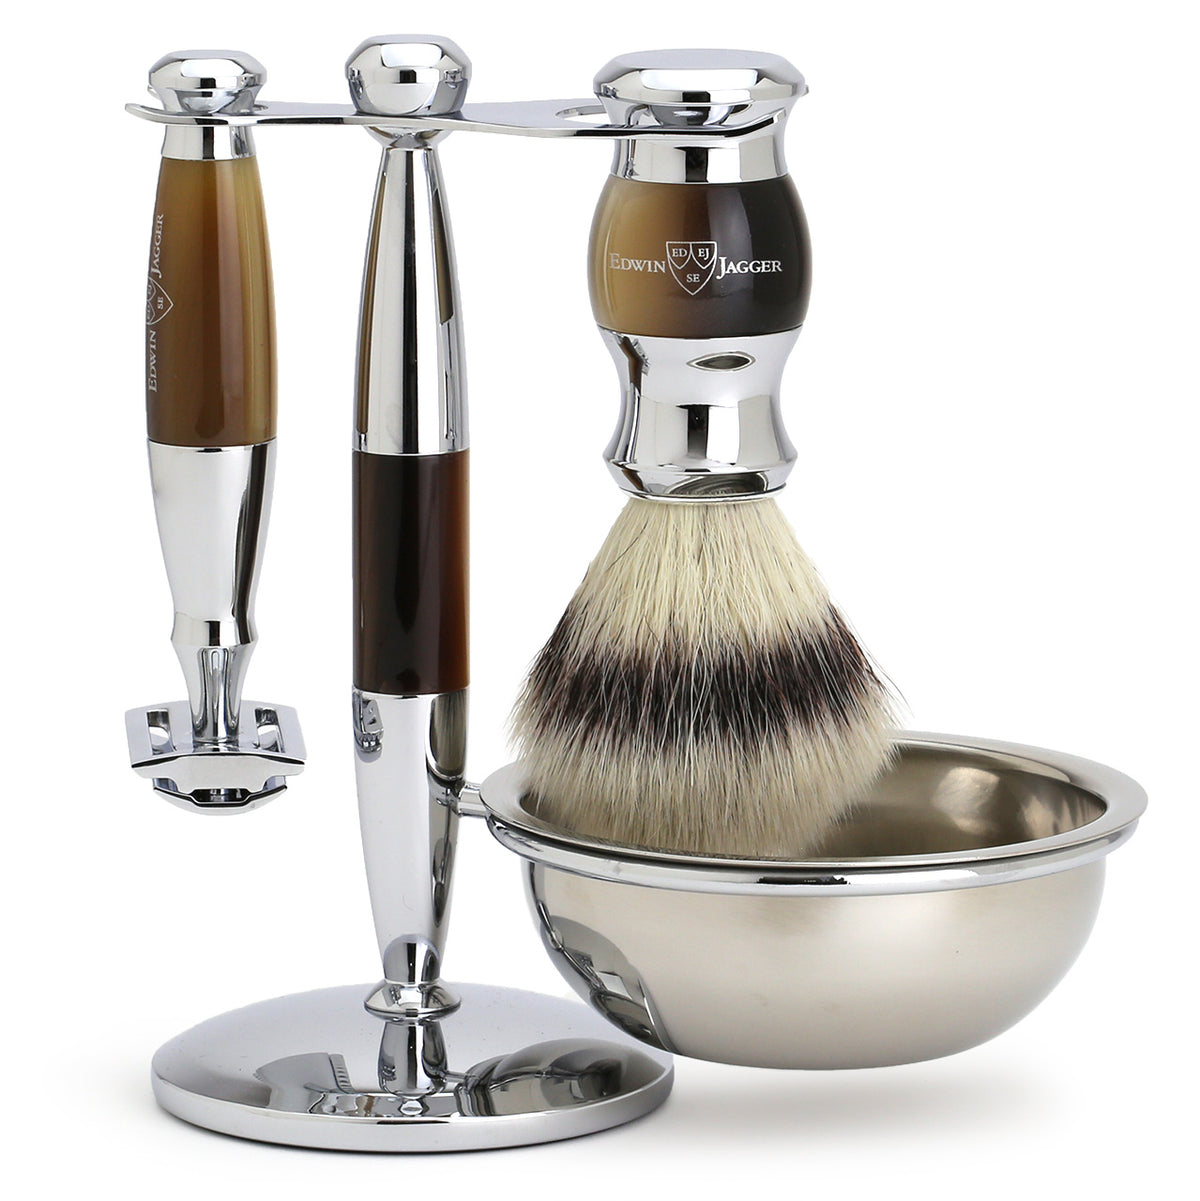 Edwin Jagger Shaving Set with Shaving Brush, Safety Razor, Stand and Soap Bowl - Imitation Light Horn